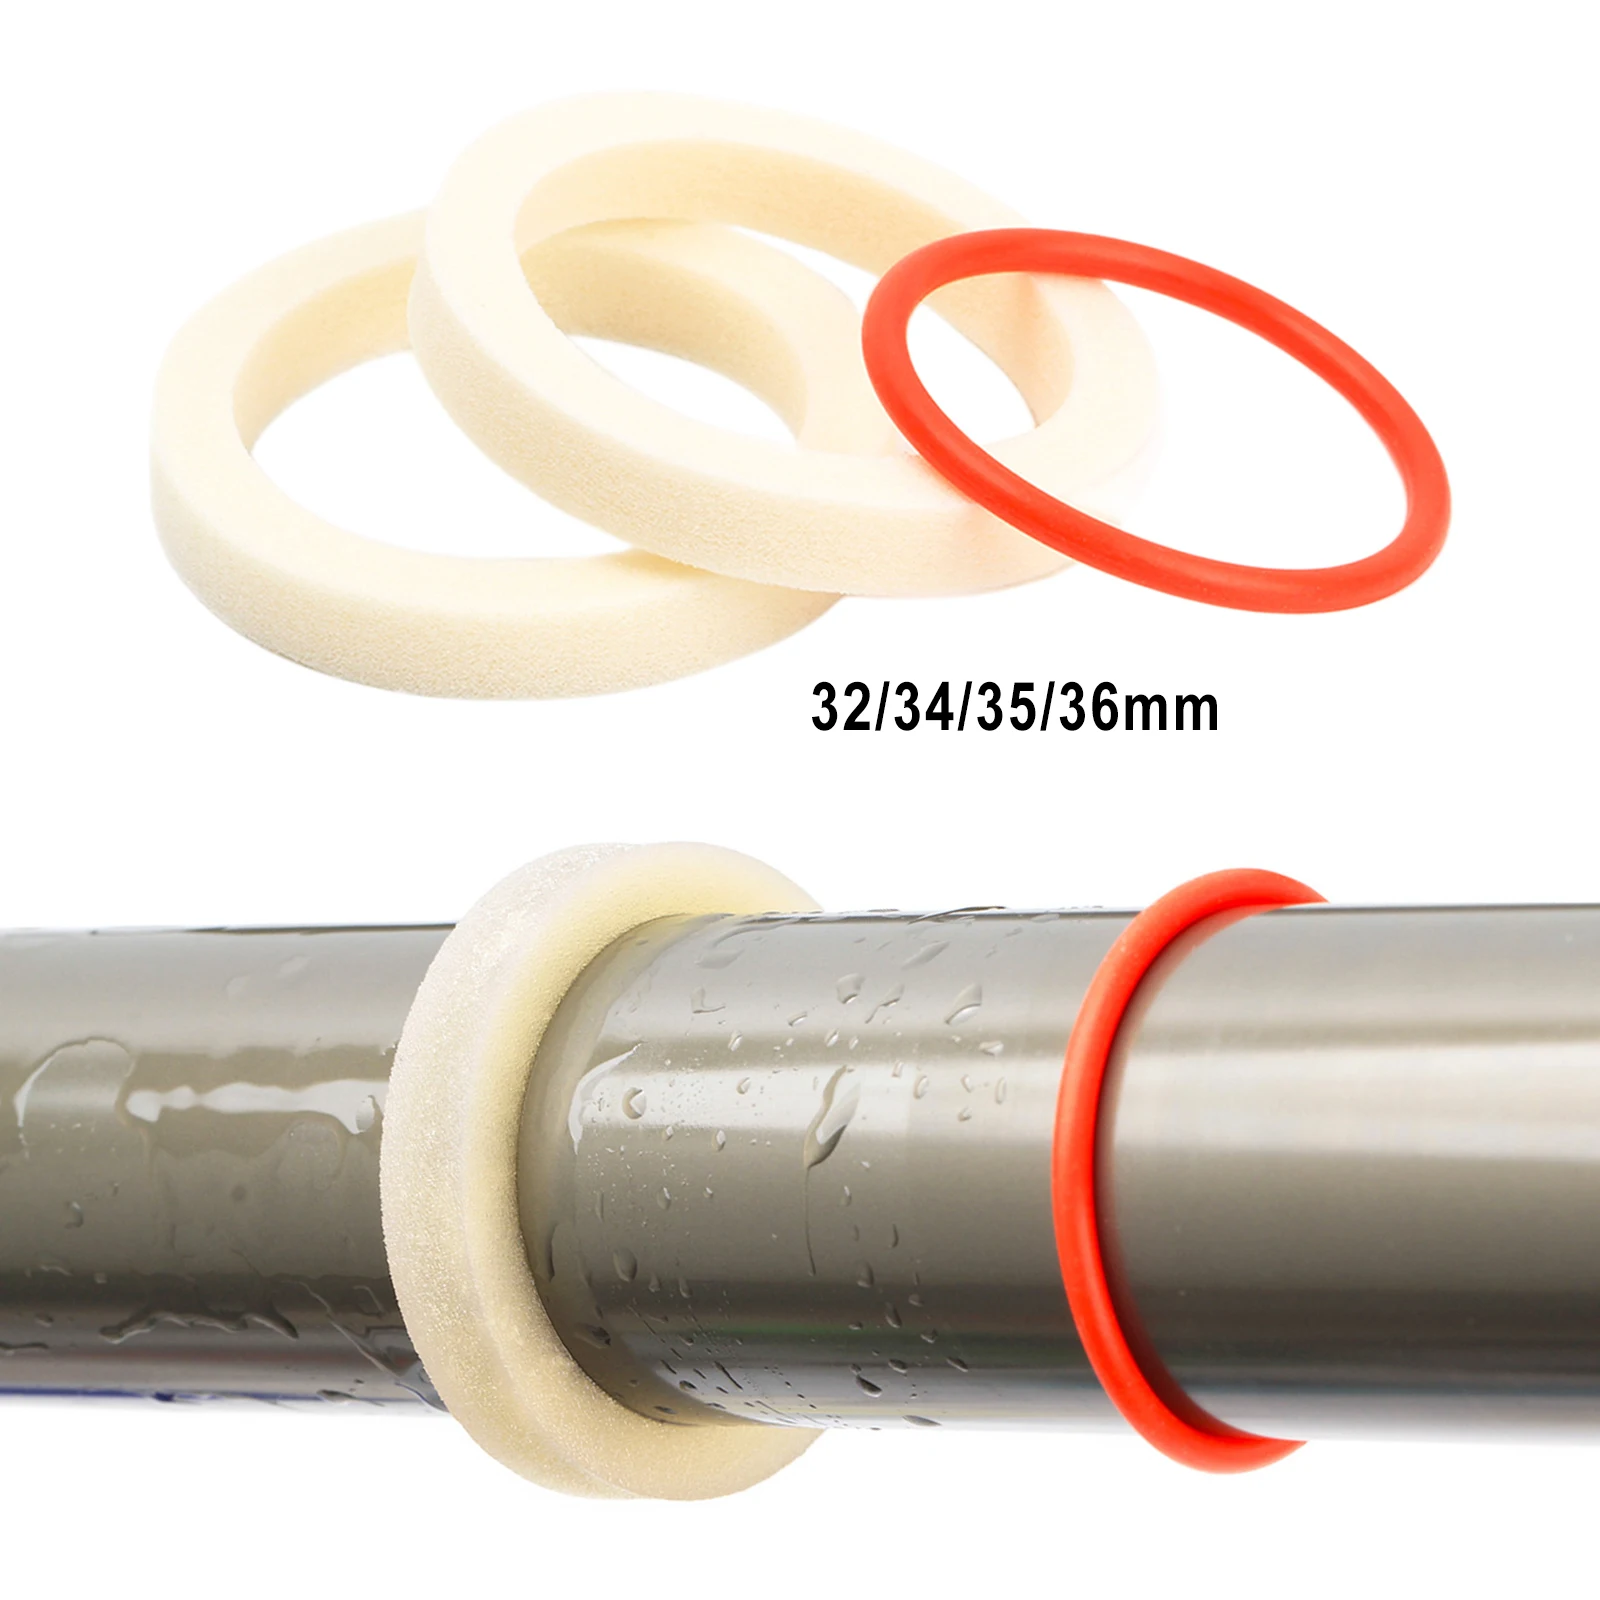 2Pcs Bicycle Front Fork Sponge Ring Oil Foam Absorb Seal 32/34/35/36mm Forks Bike Accessories